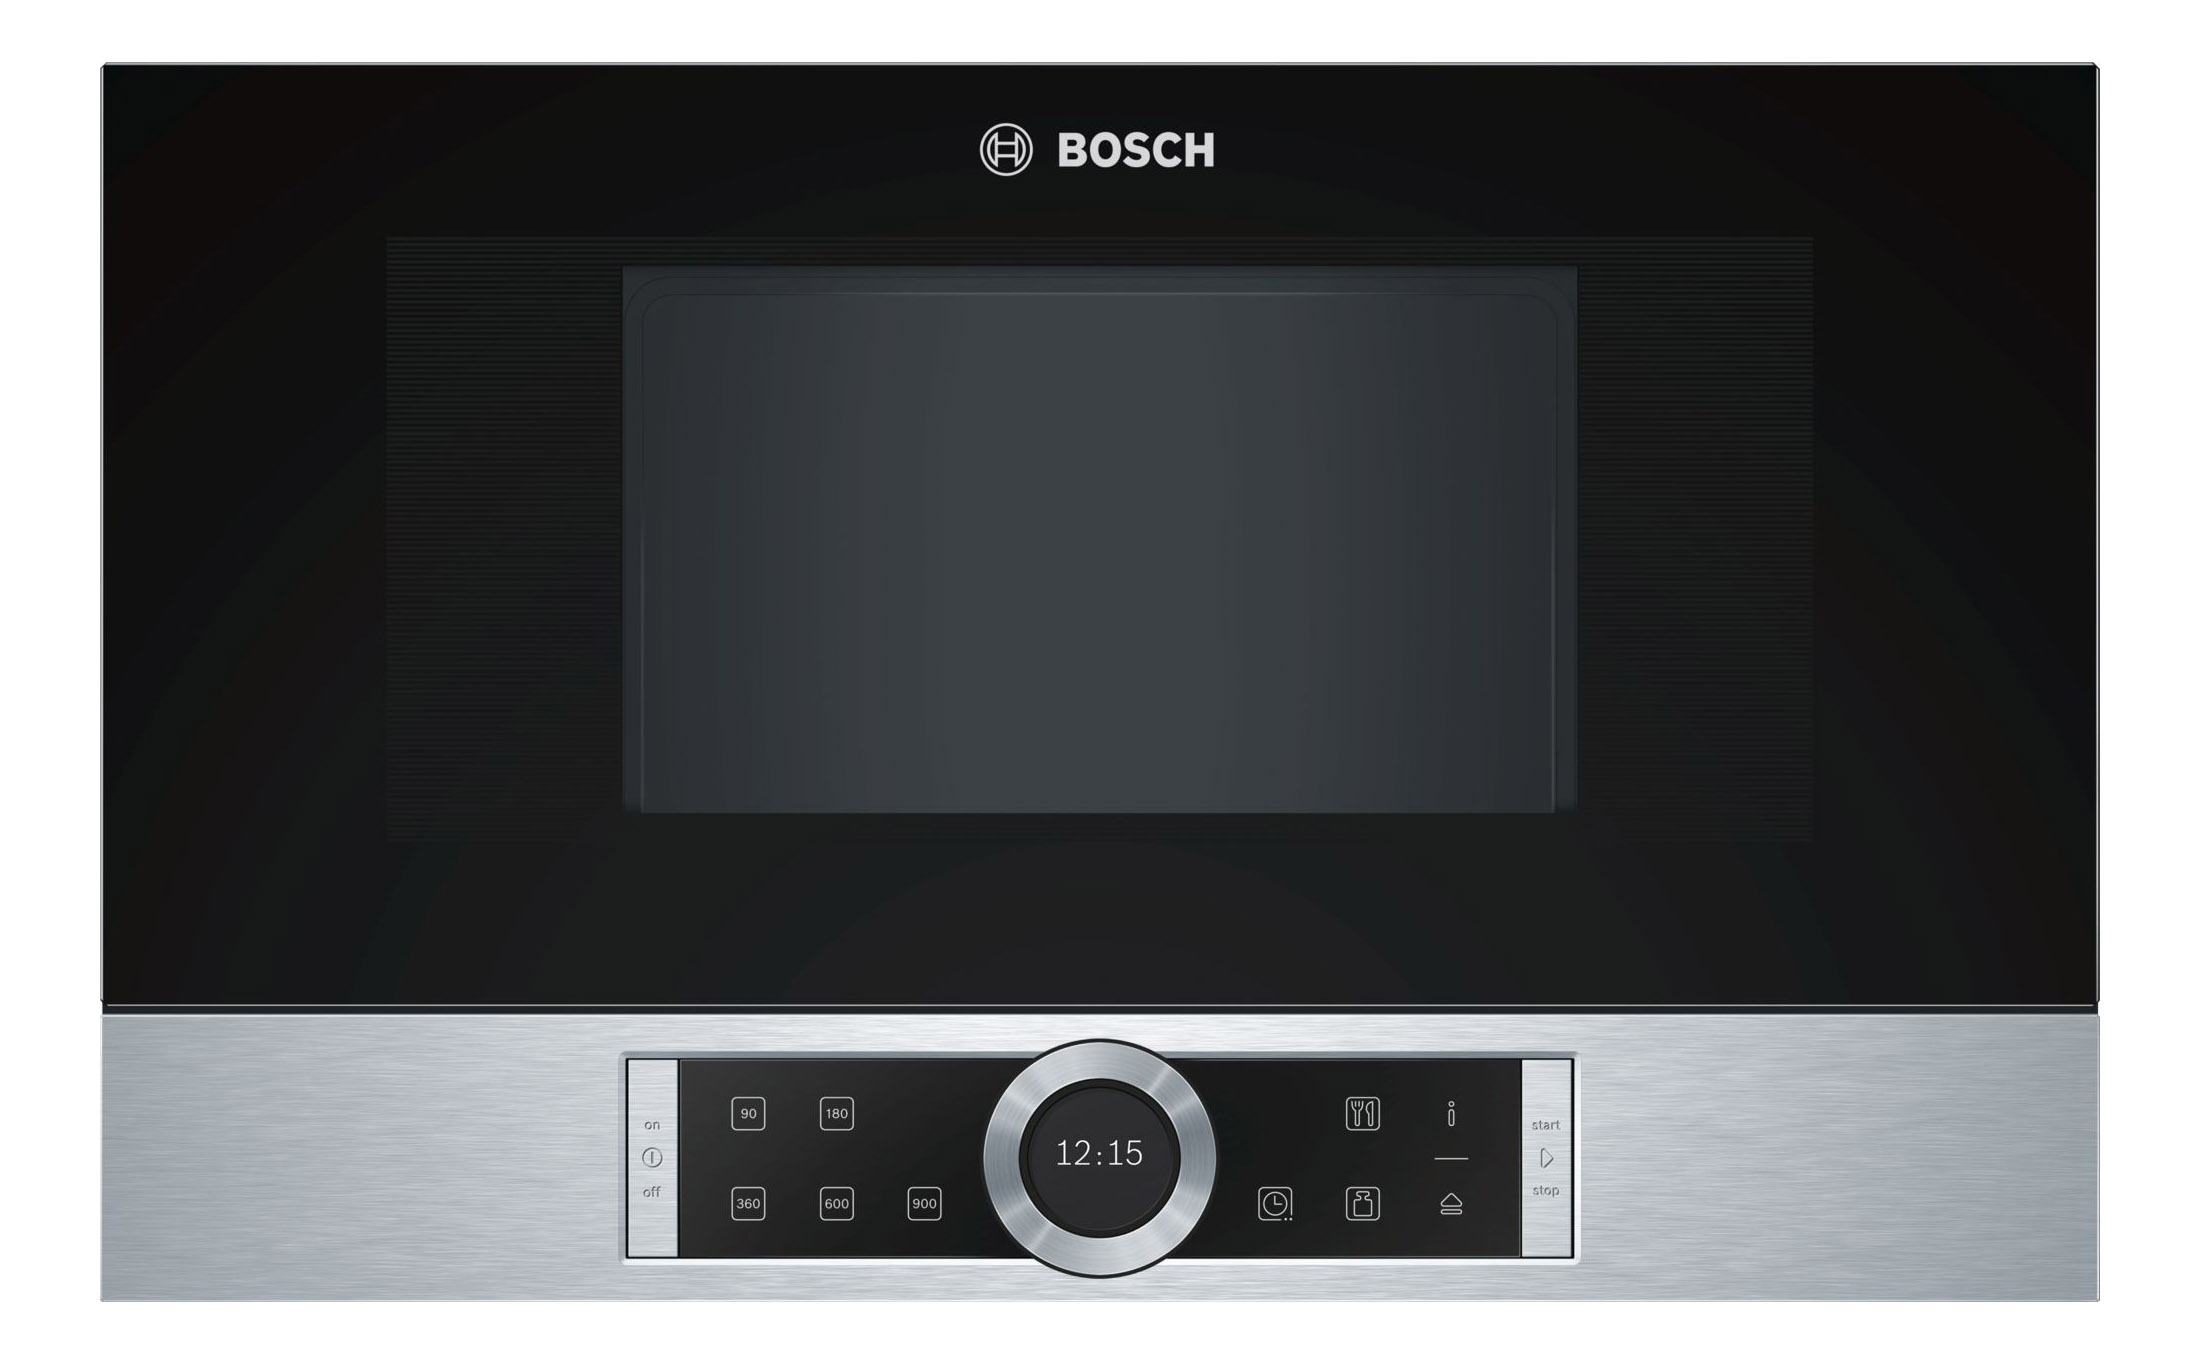 Встраиваемая микроволновая печь Bosch BFL634GS1 Black/Silver встраиваемая микроволновая печь bosch bfl554mw0 white